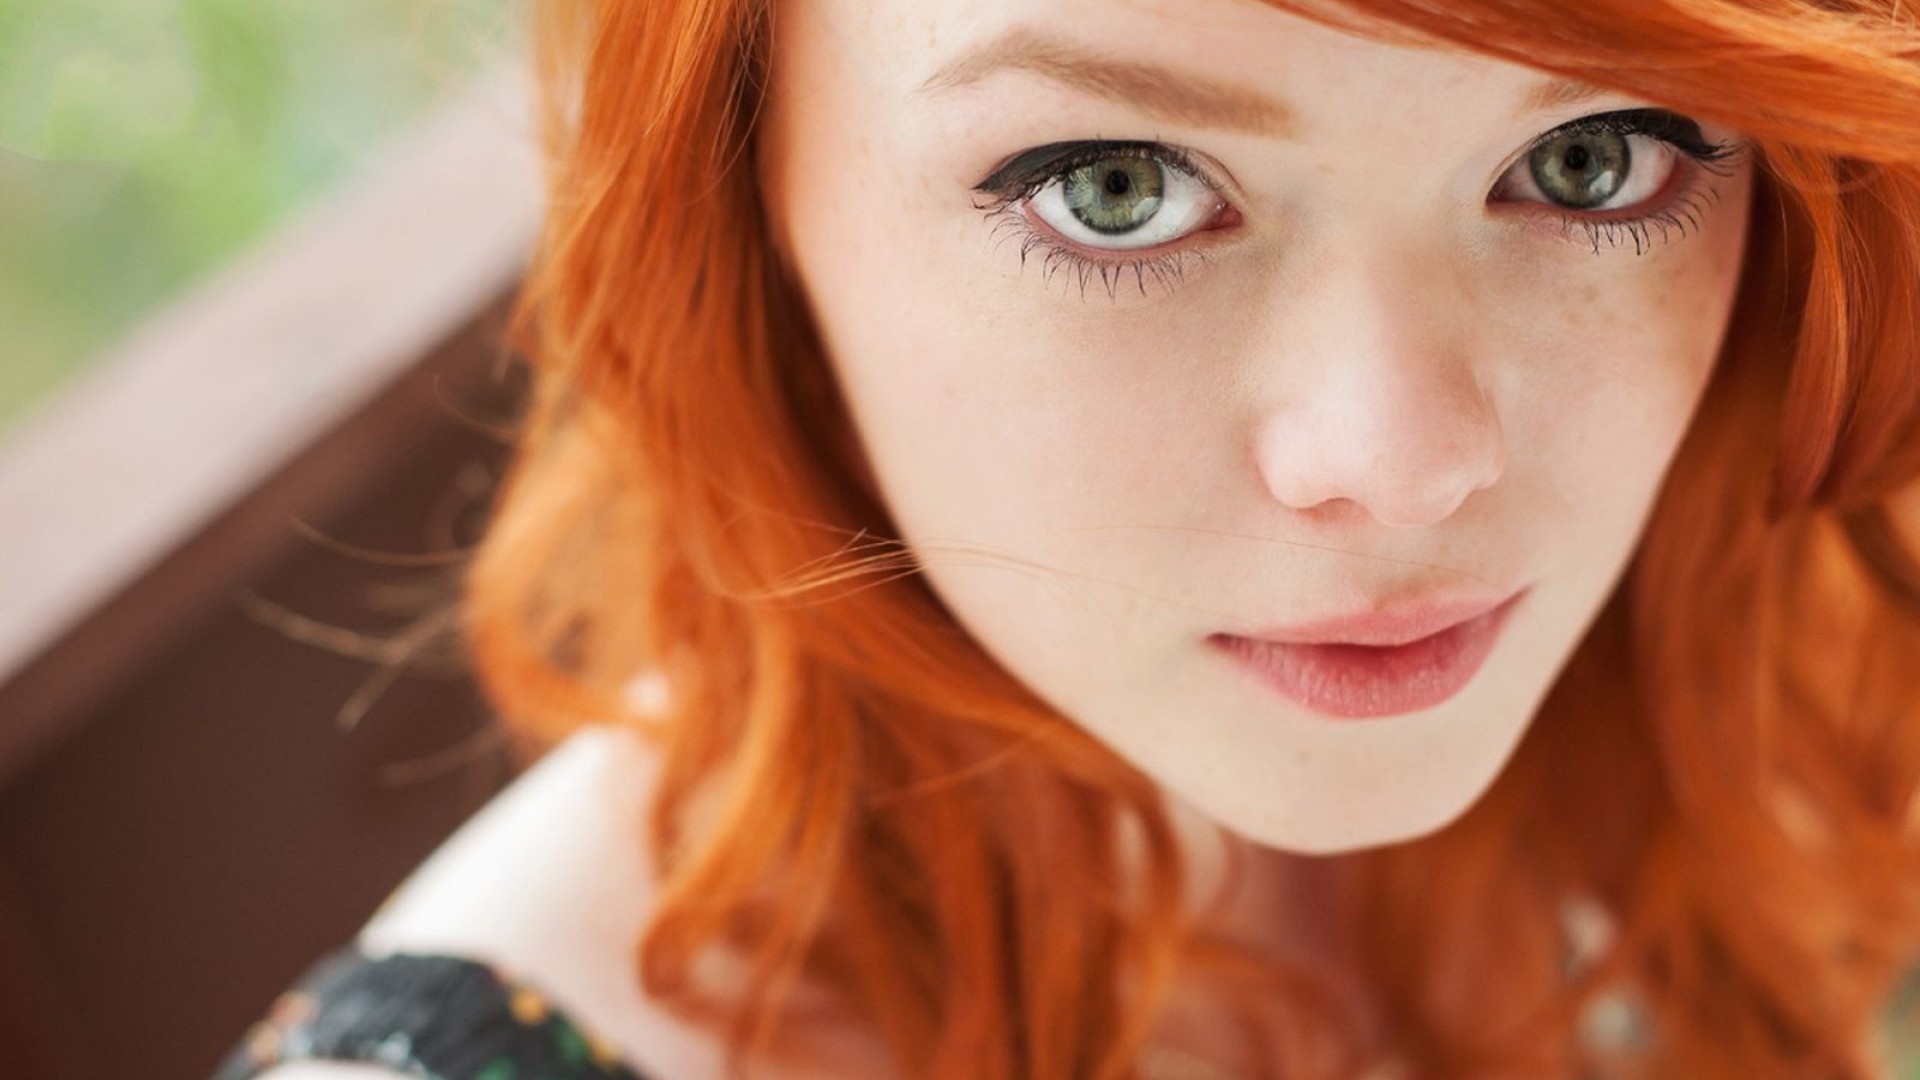 redhead women model face green eyes Wallpaper